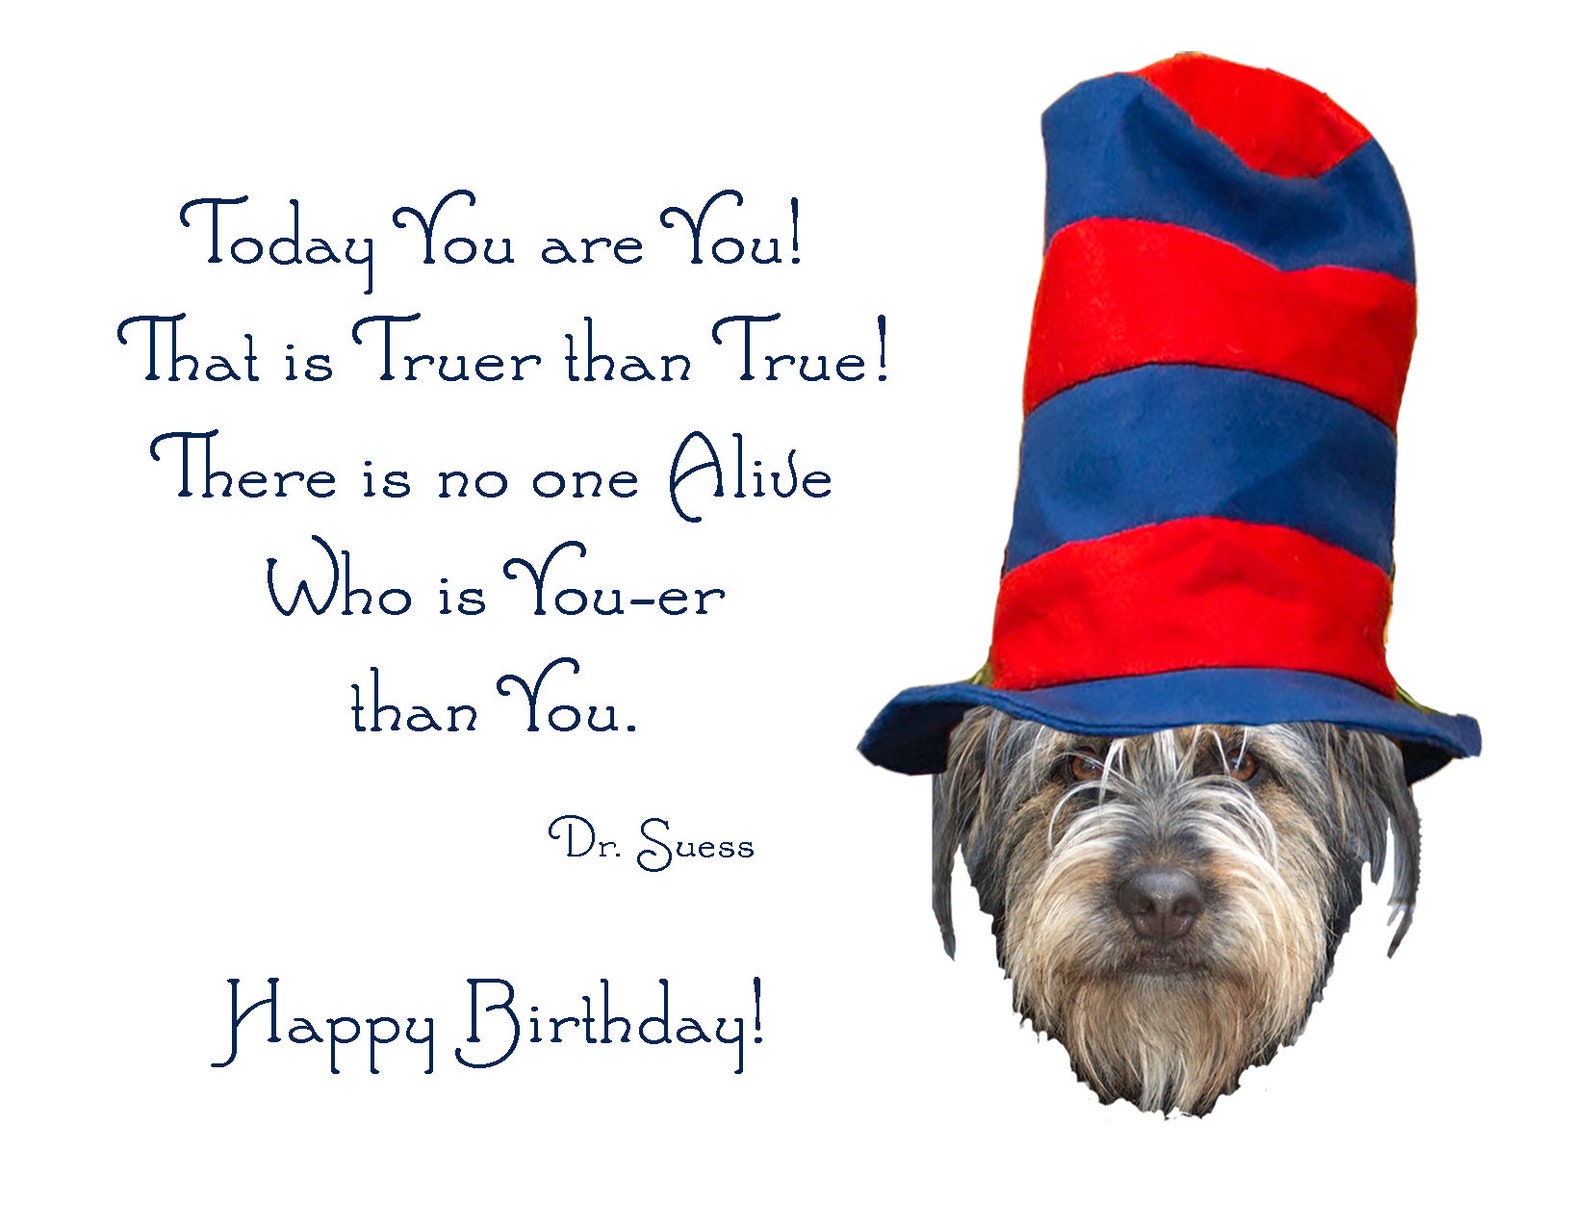 The Dog In The Hatfunny Birthday Carddog Birthday Card For Etsy